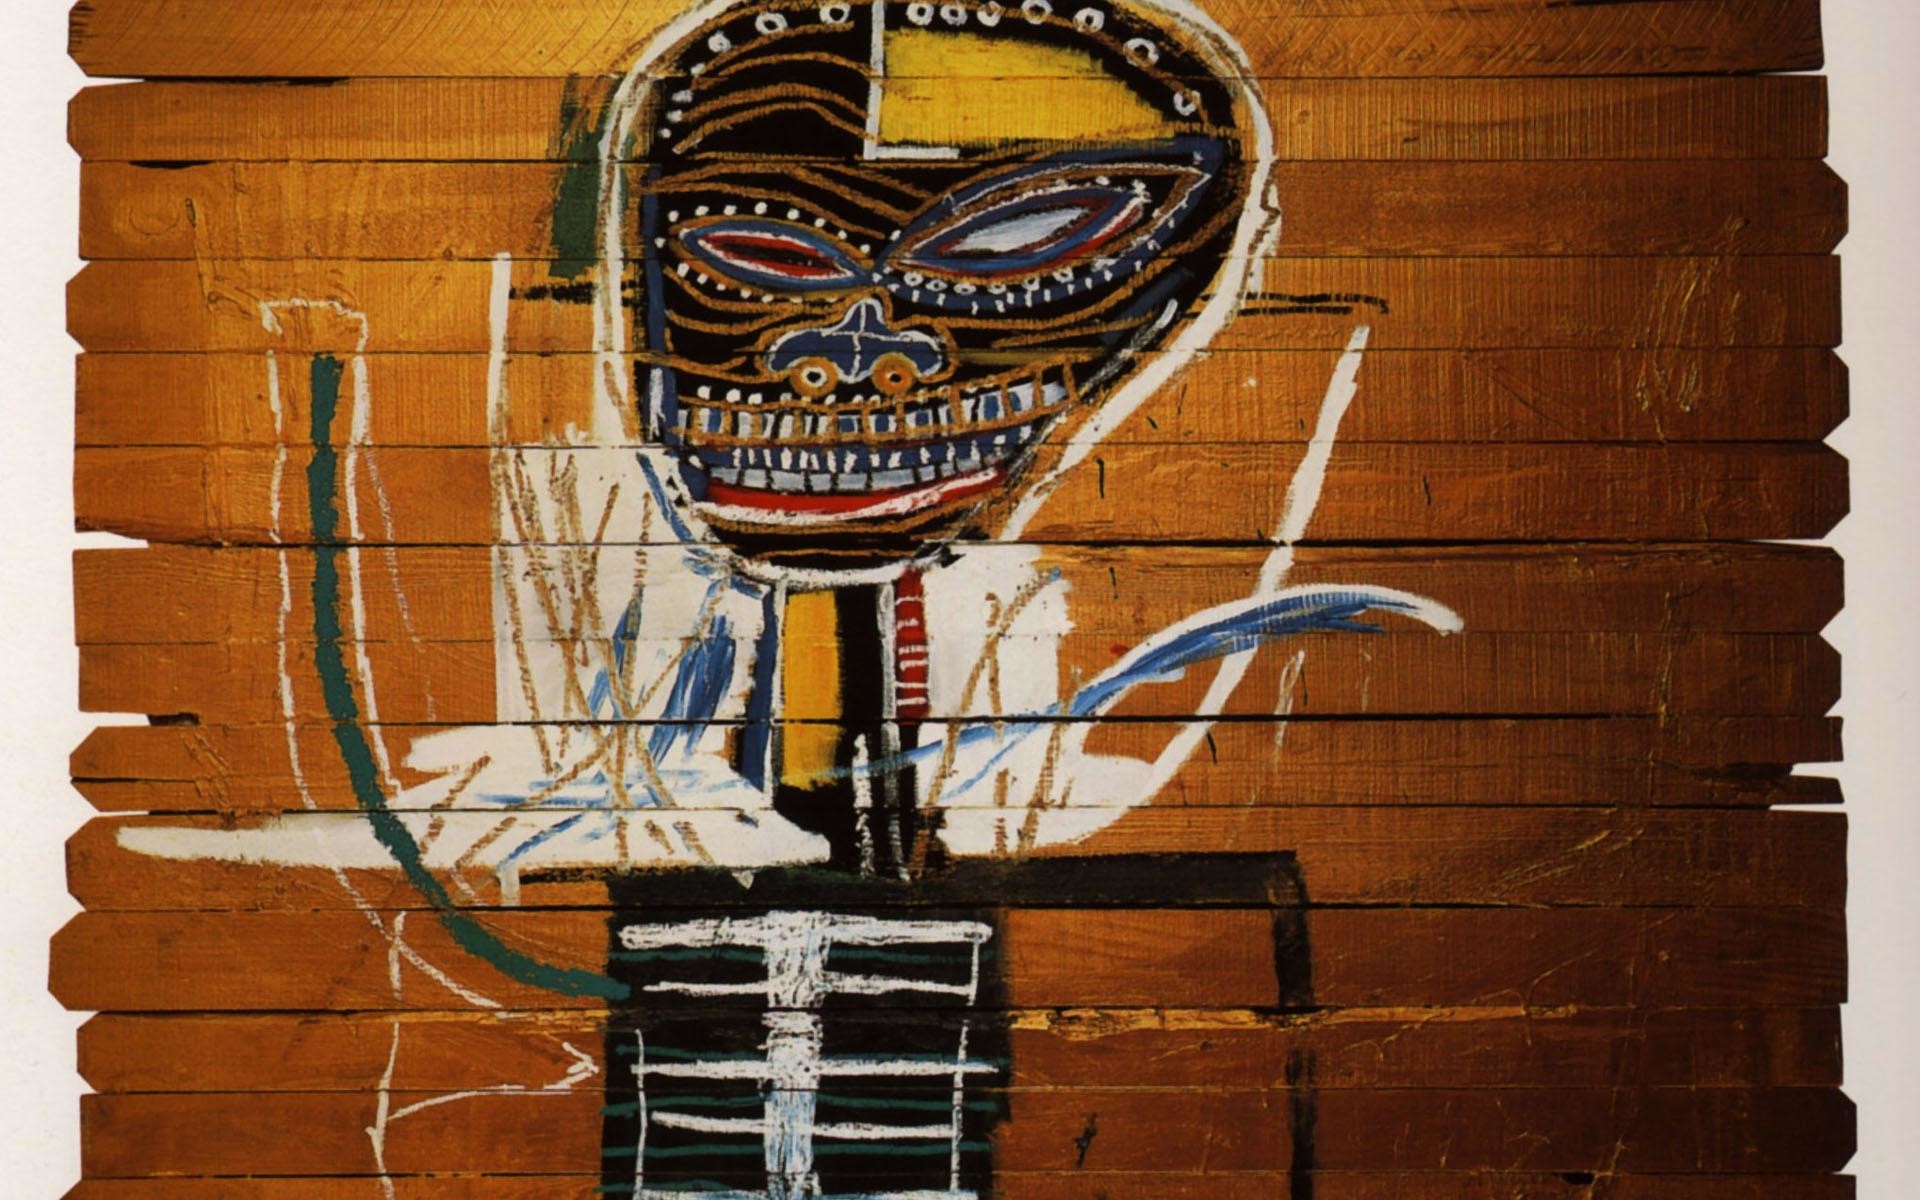 Jean Micheal Basquiat by Jordan Anthony Tate  Issuu